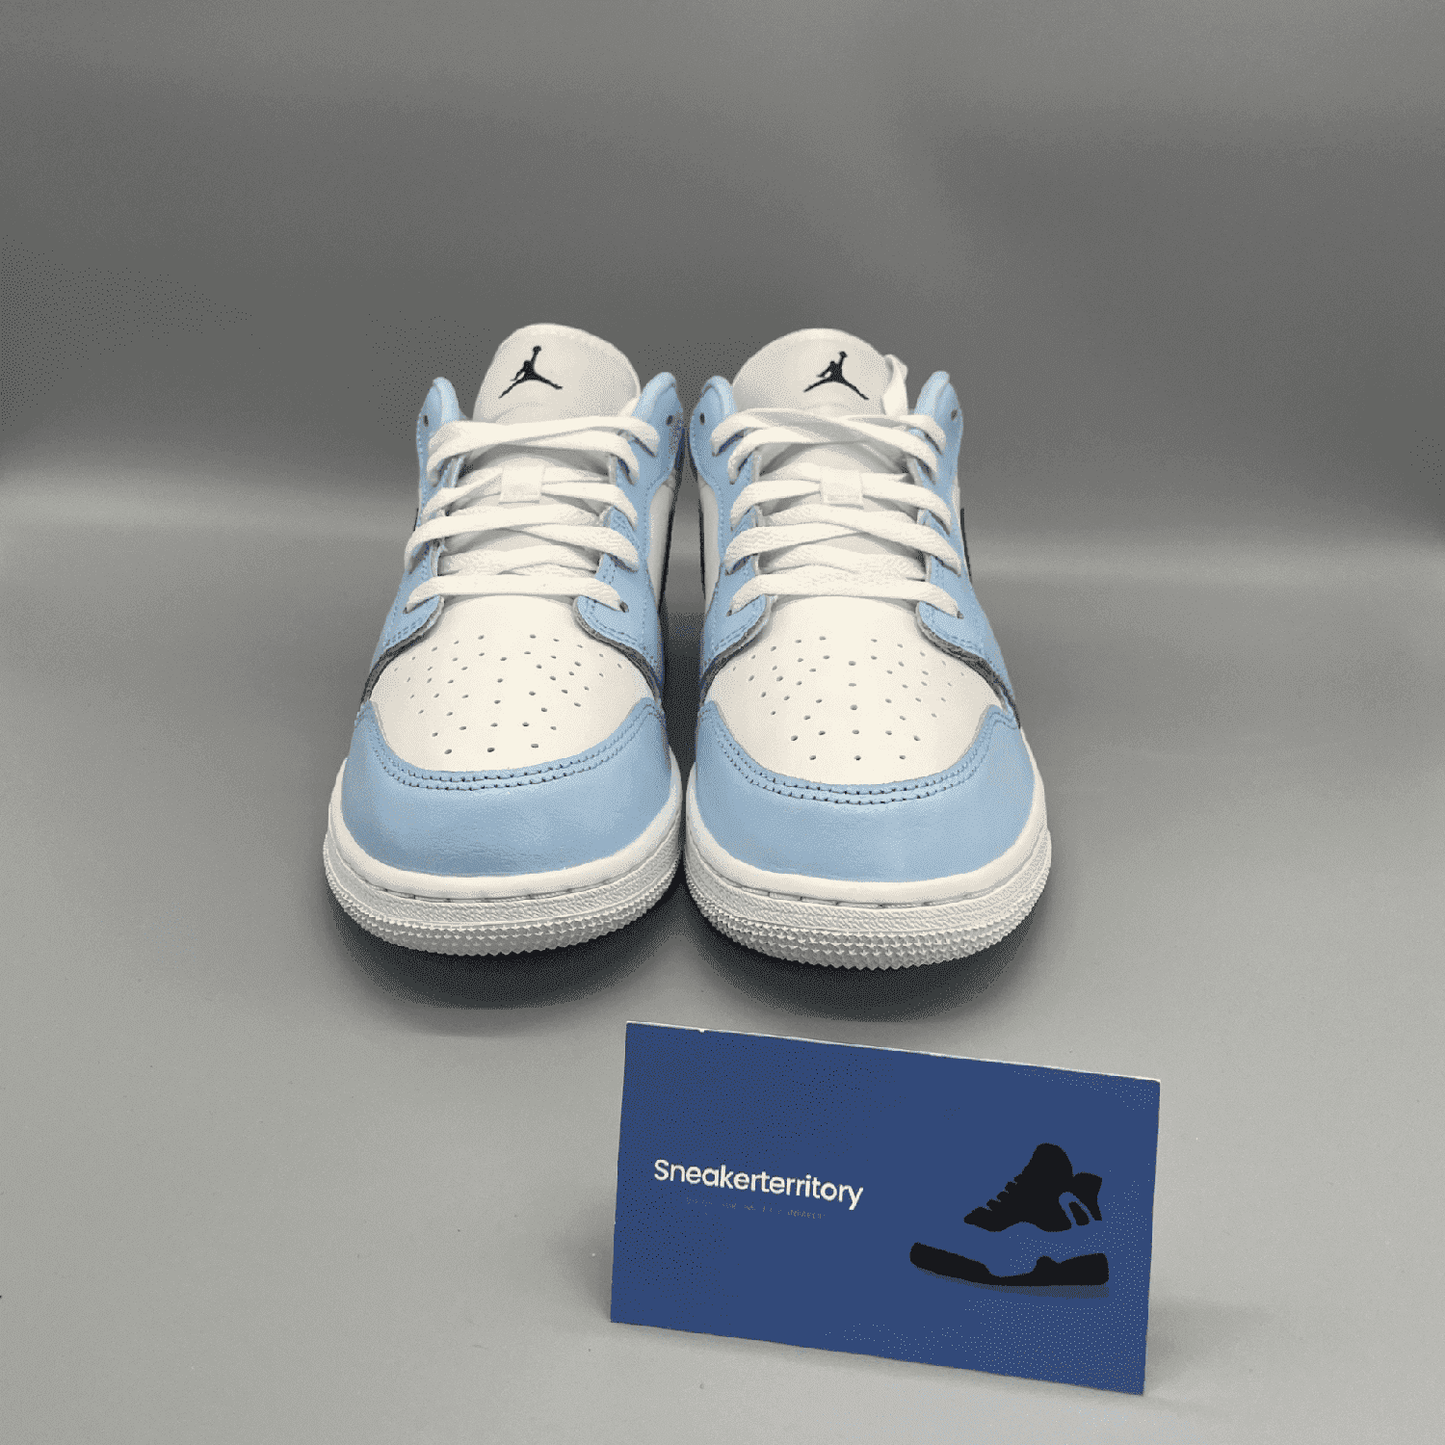 Air Jordan 1 Low Ice Blue Black (GS) - Sneakerterritory; Sneaker Territory 5